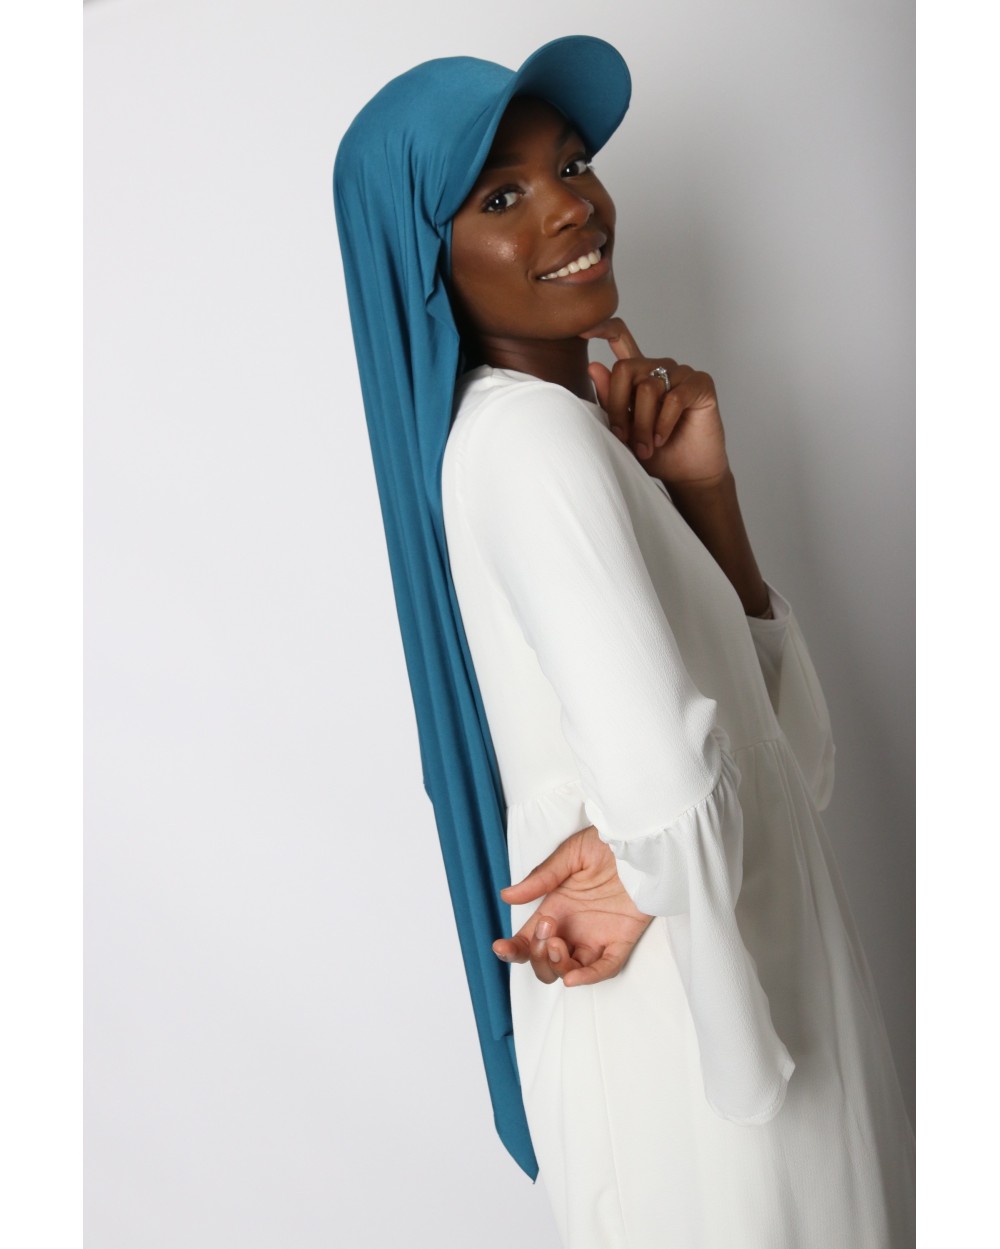 hijab slip cap